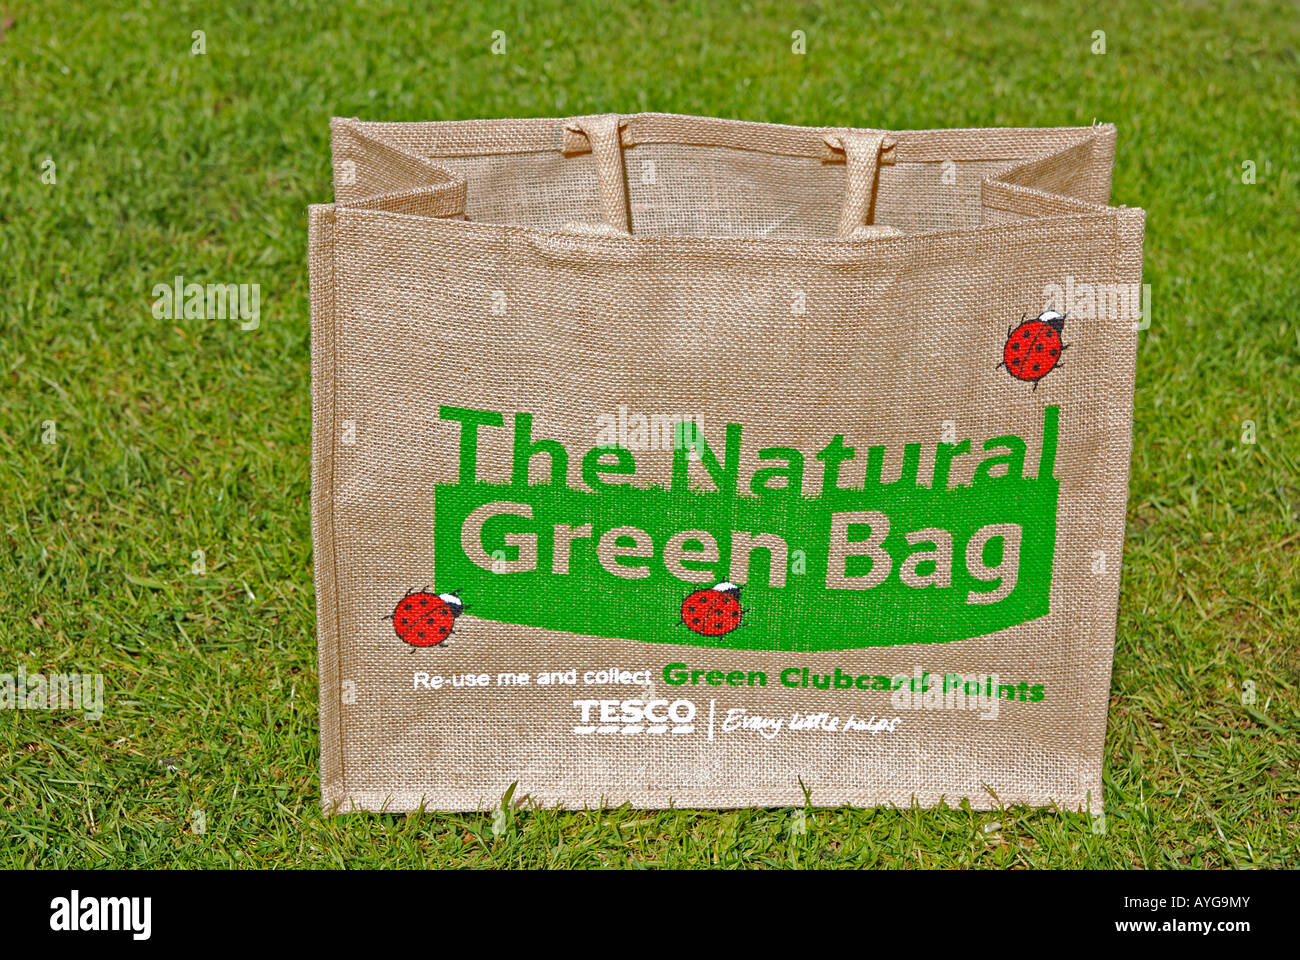 tesco green shopping bag outside on a lawn Stock Photo